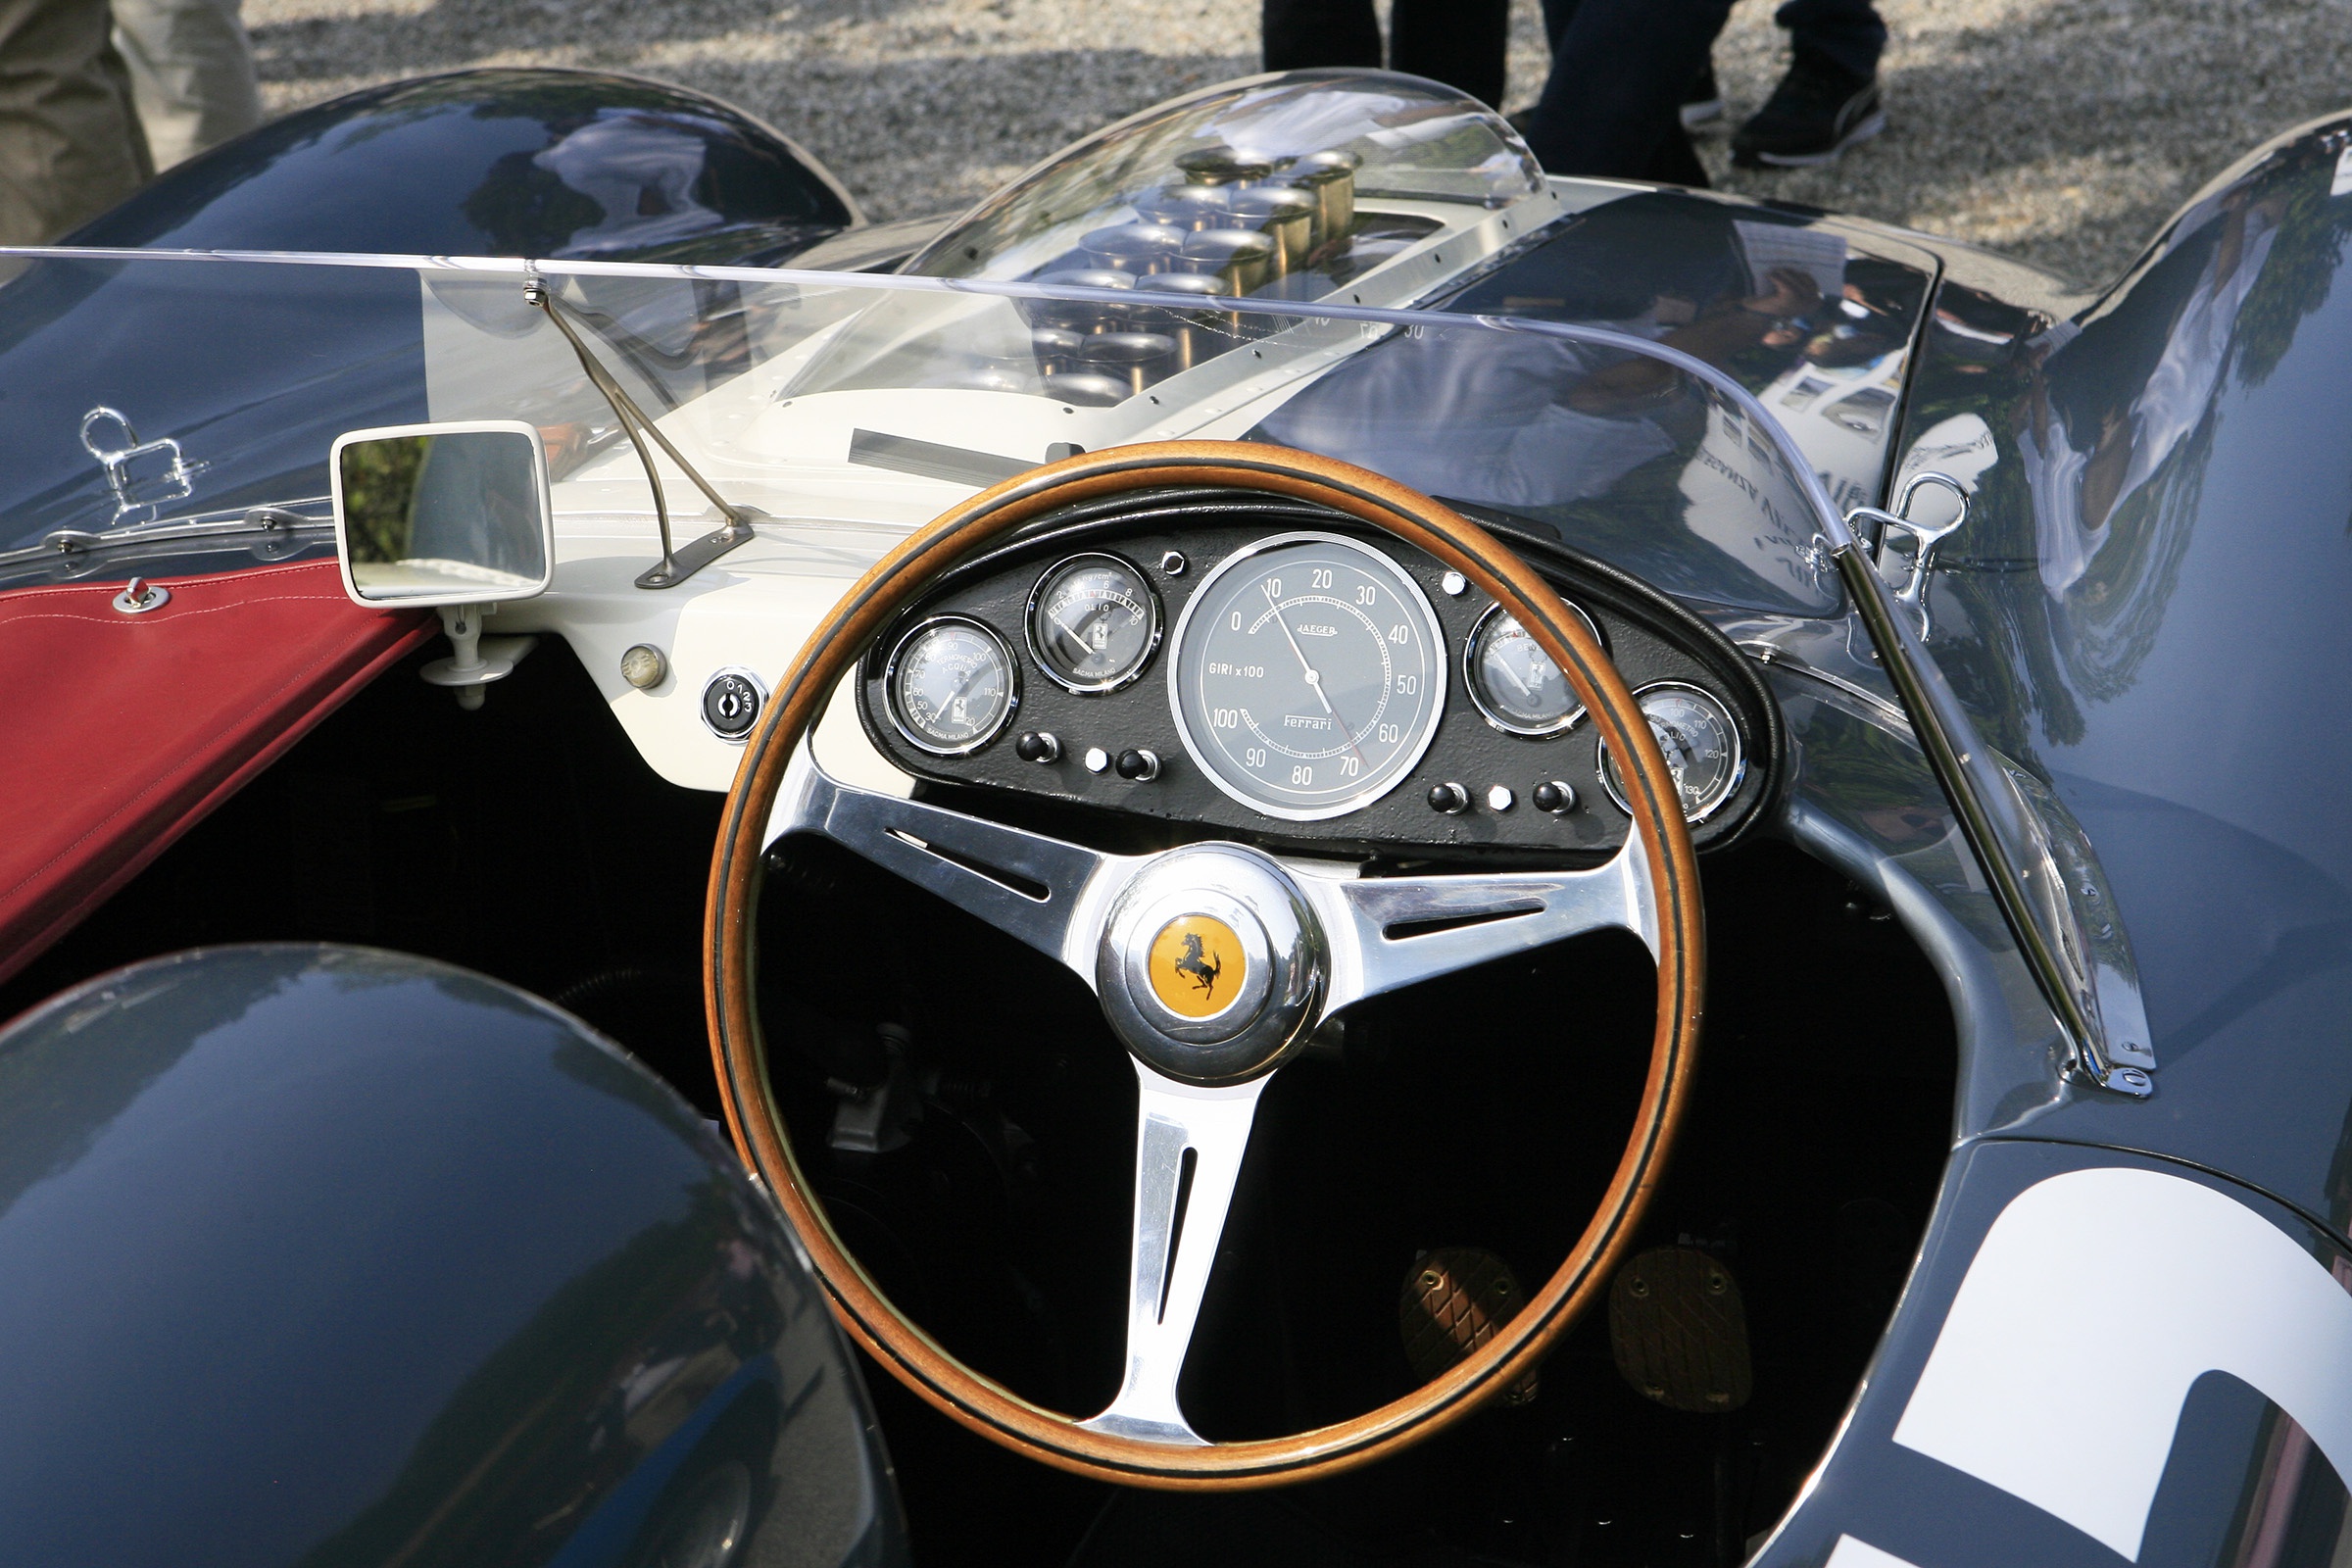 Ferrari 335 Sport cockpit and the V12 engine